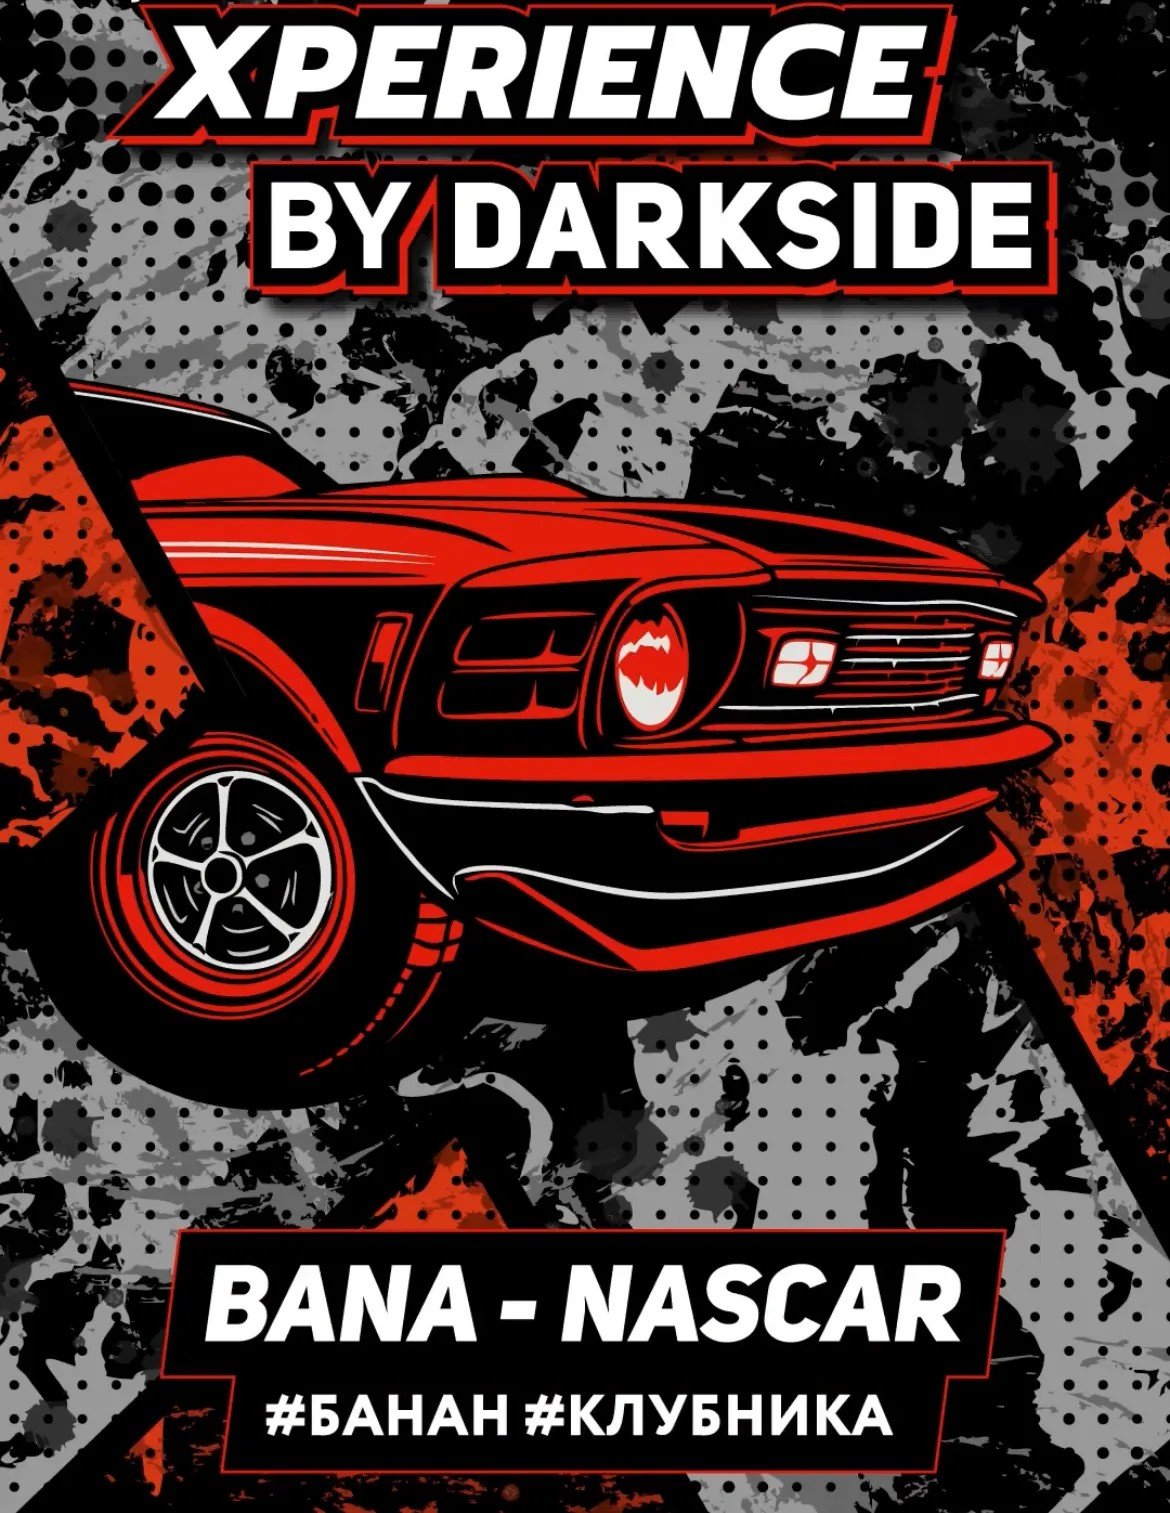 (M) Darkside Xperience 30 г Bana - Nascar